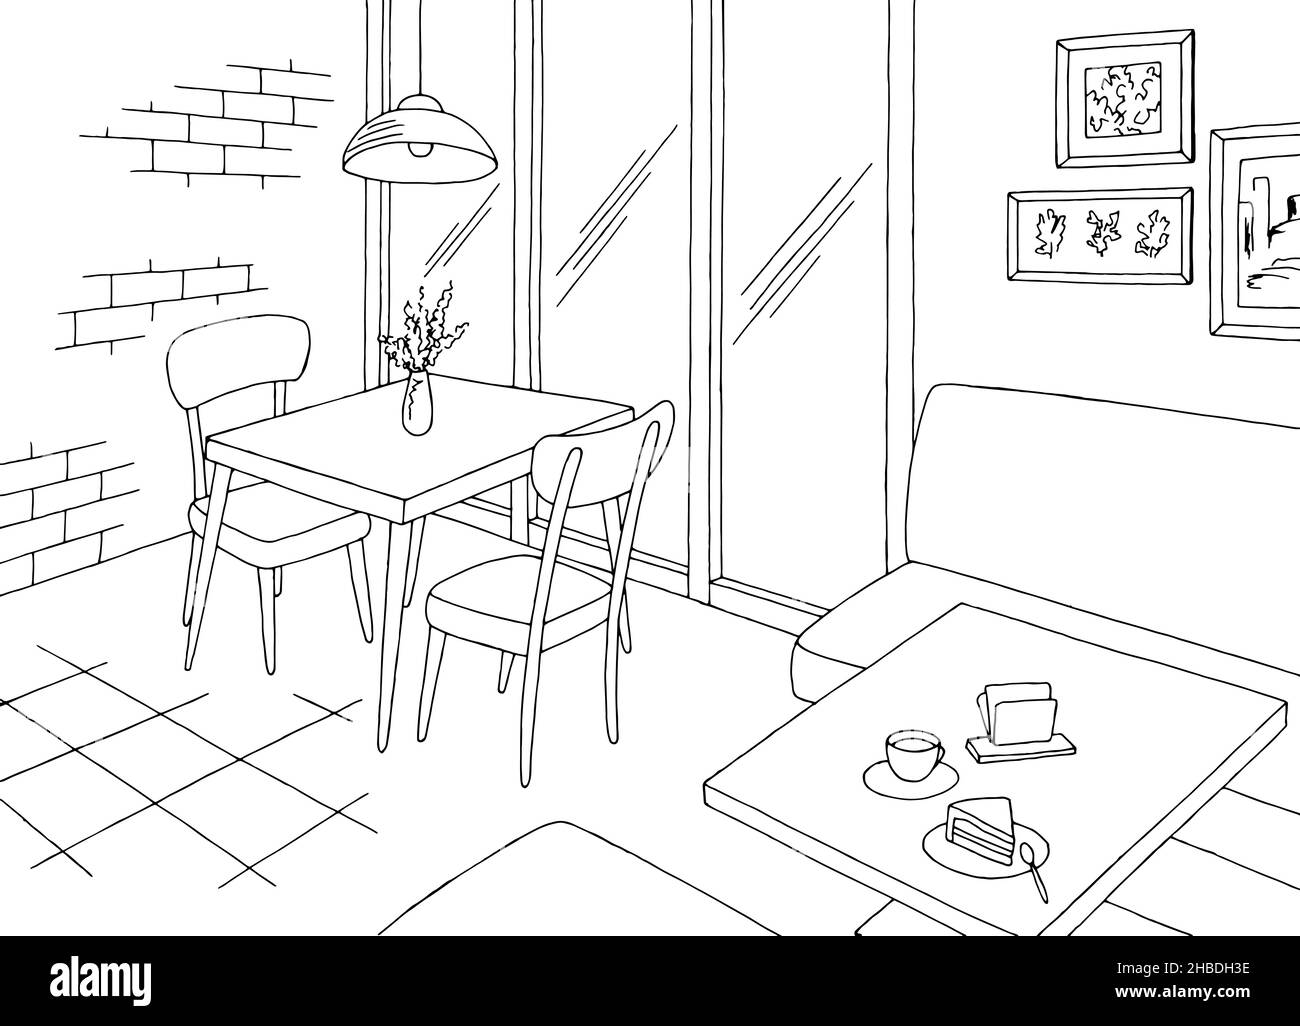 Cafe interior graphic black white sketch illustration vector Stock Vector